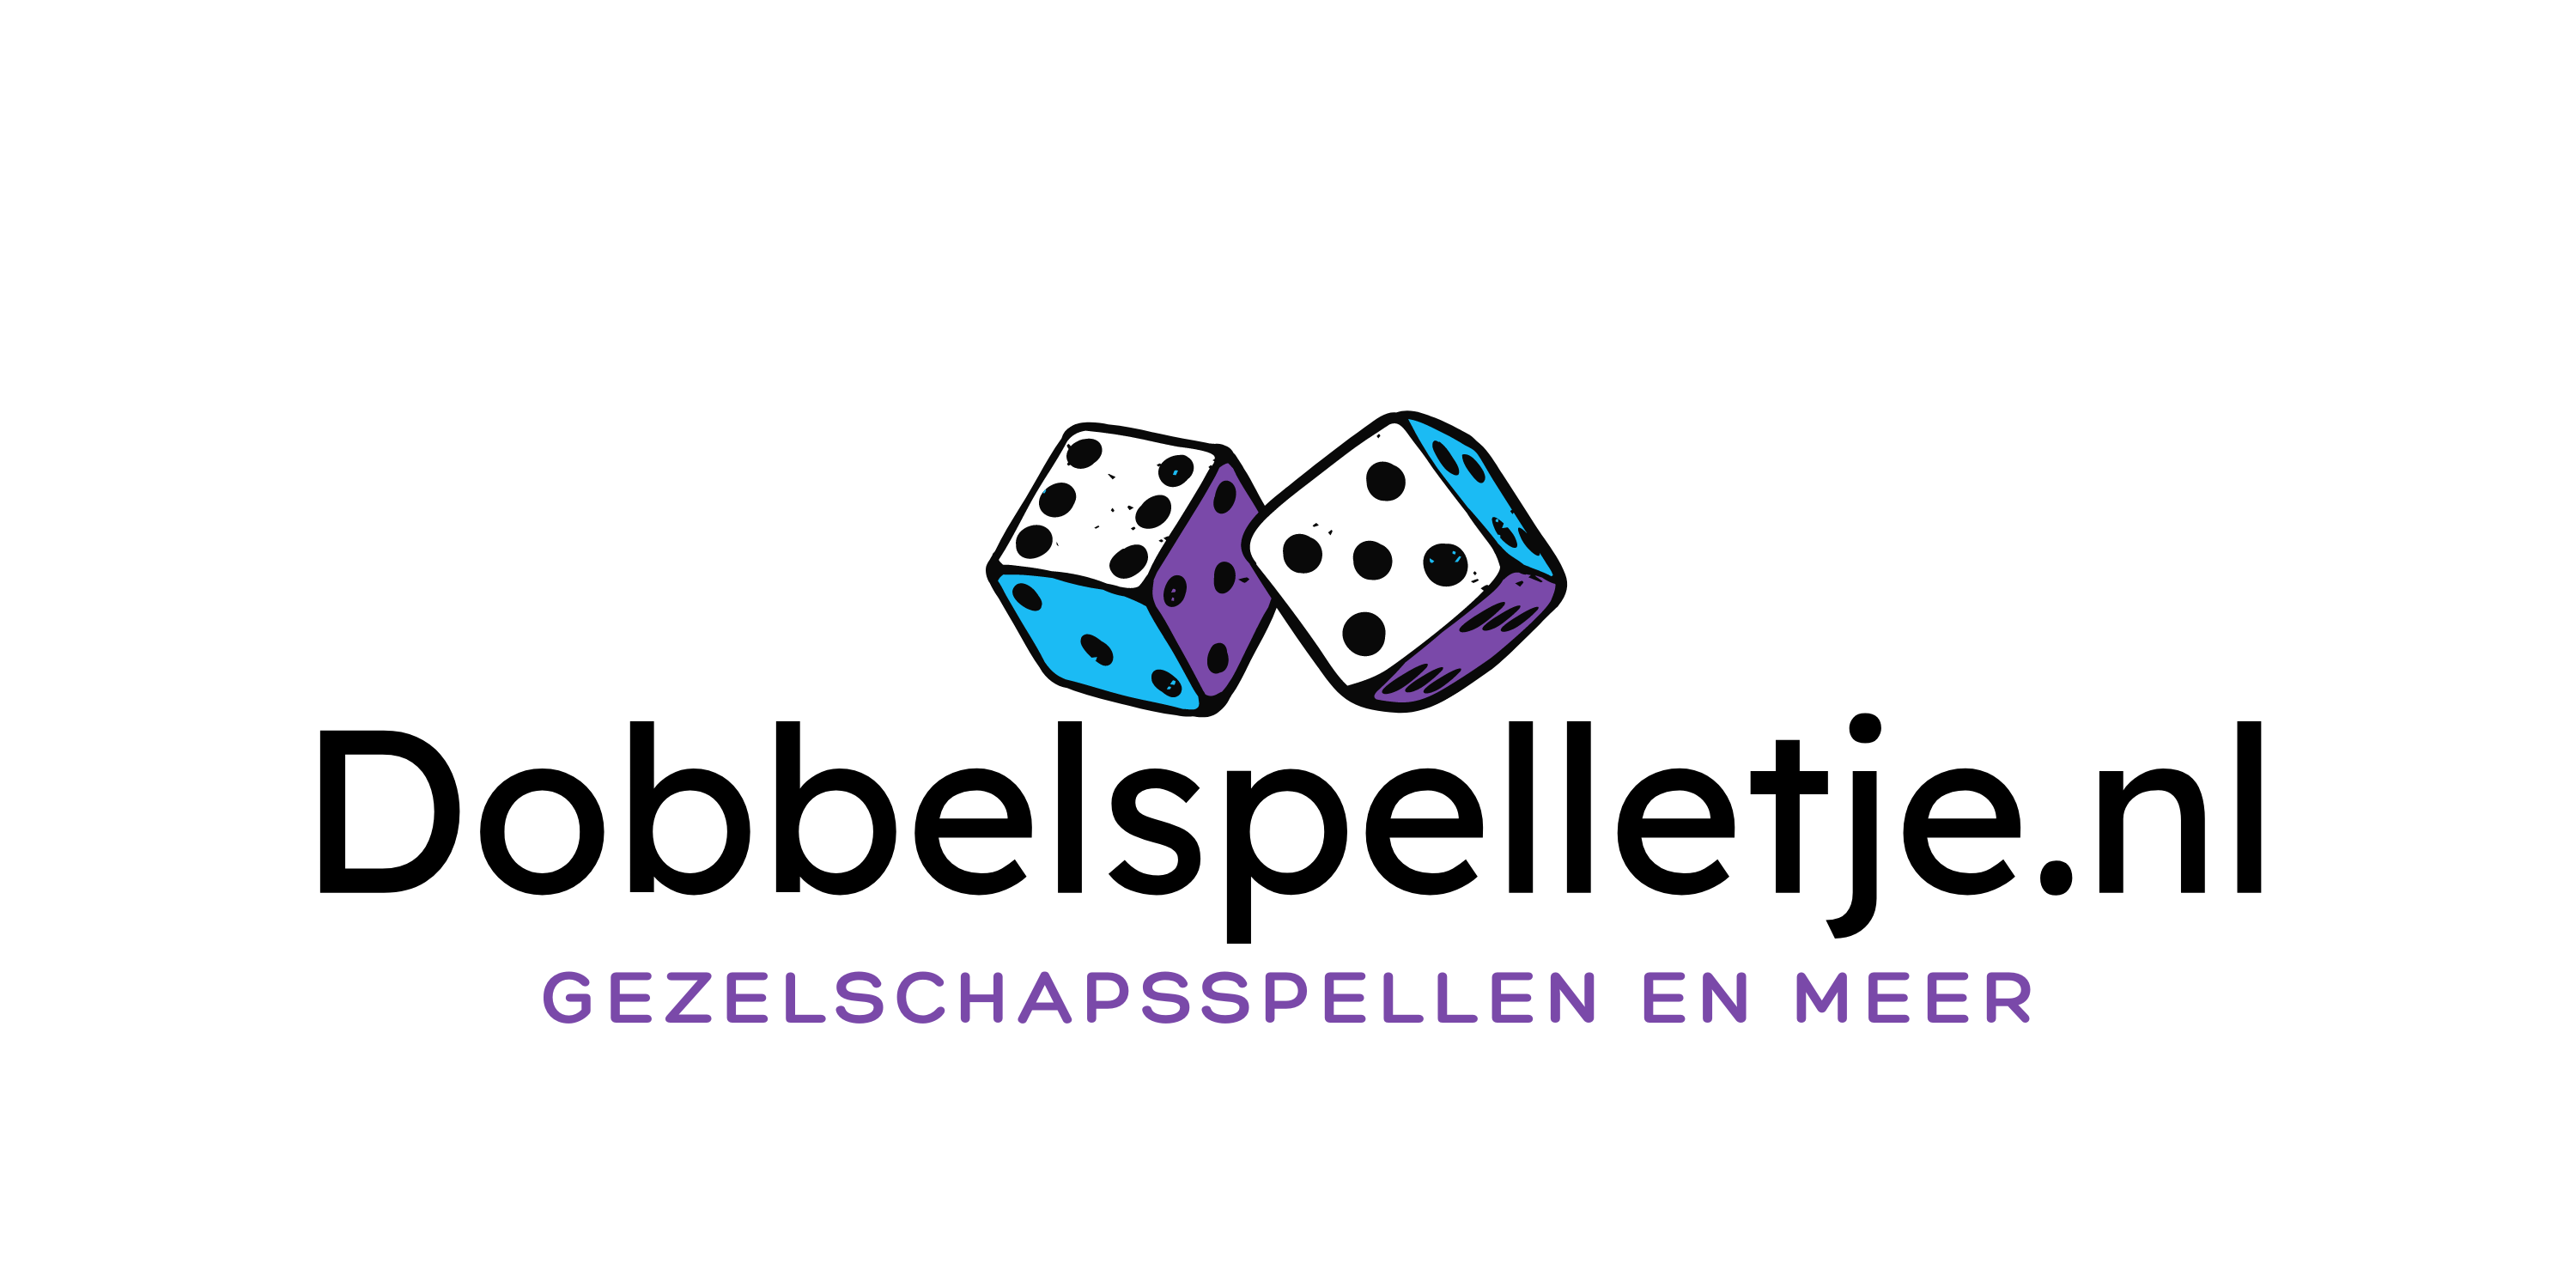 Dobbelspelletje.nl logo (1000 x 500 px)